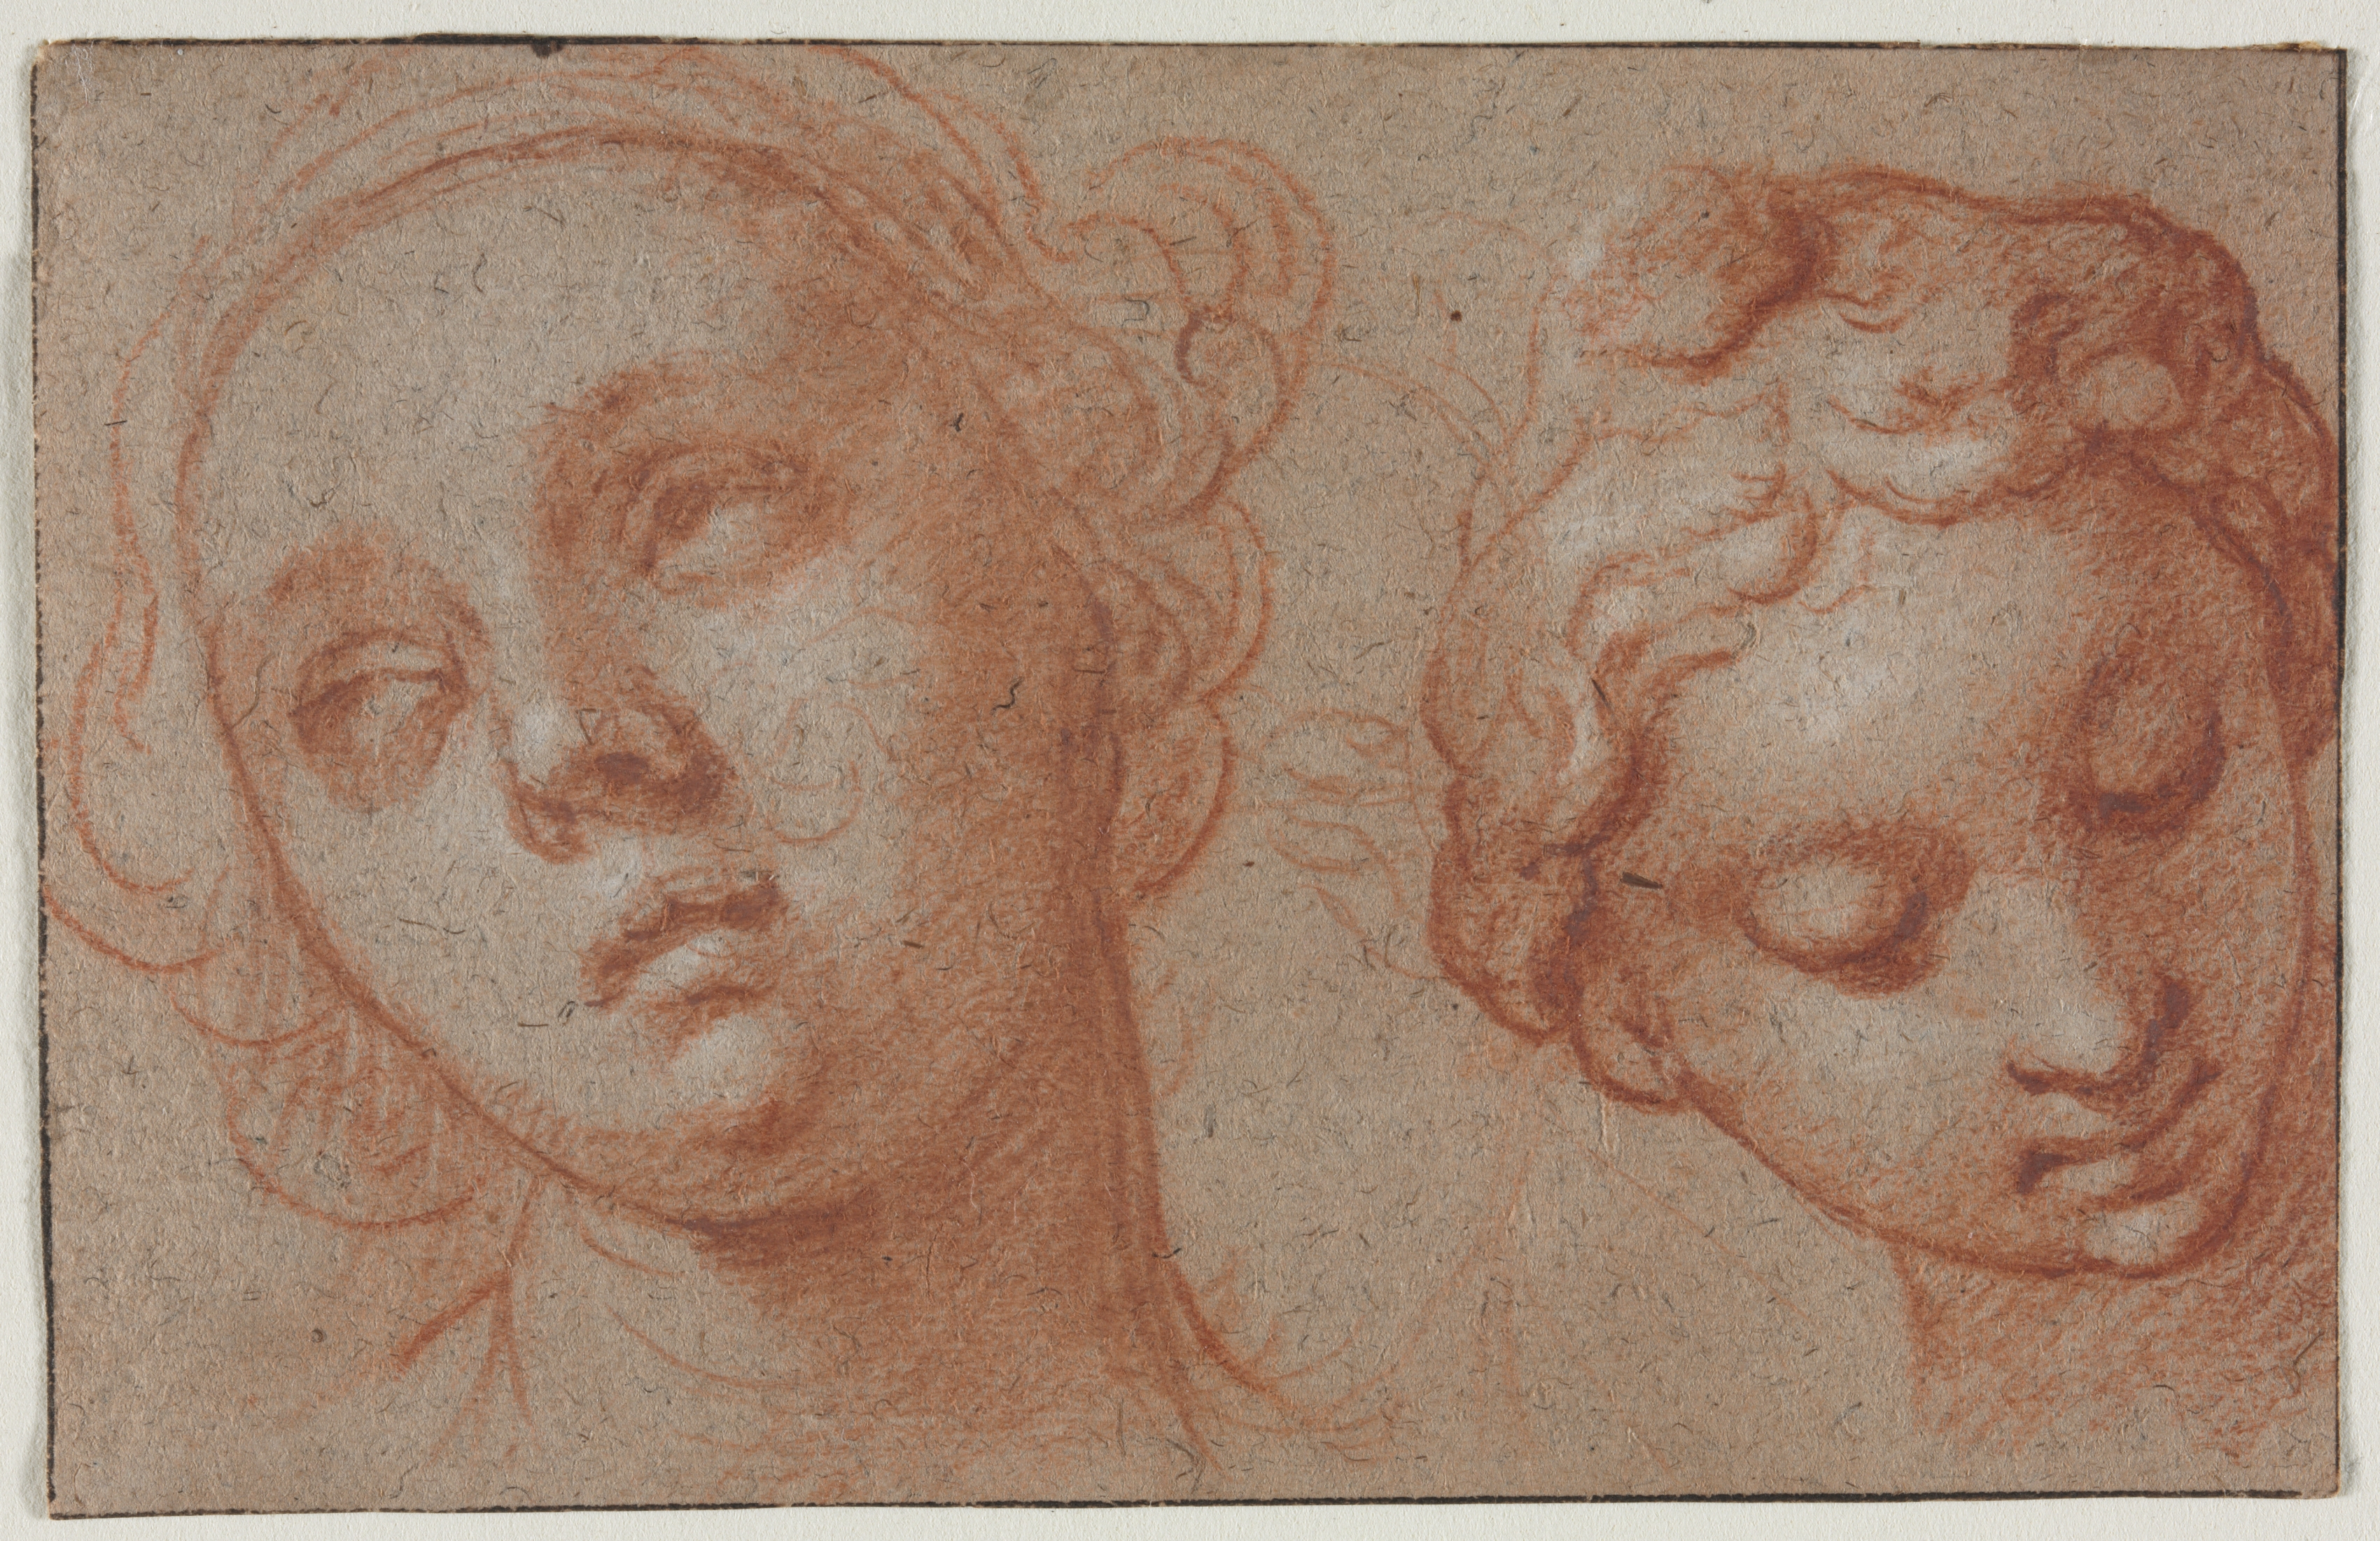 Two Female Heads